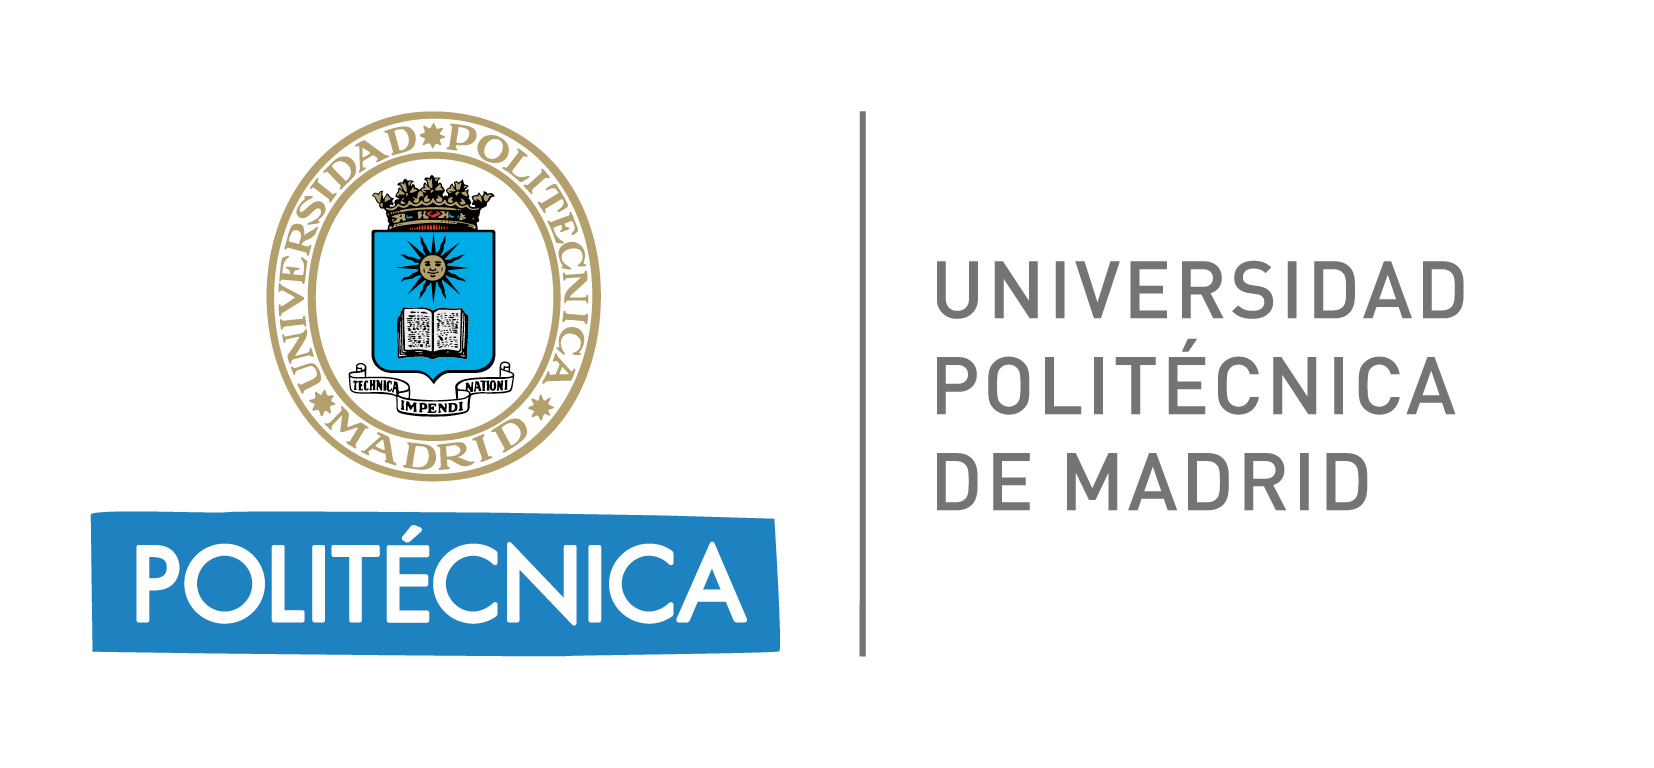 Universidad Politécnica de Madrid | Cursos.com